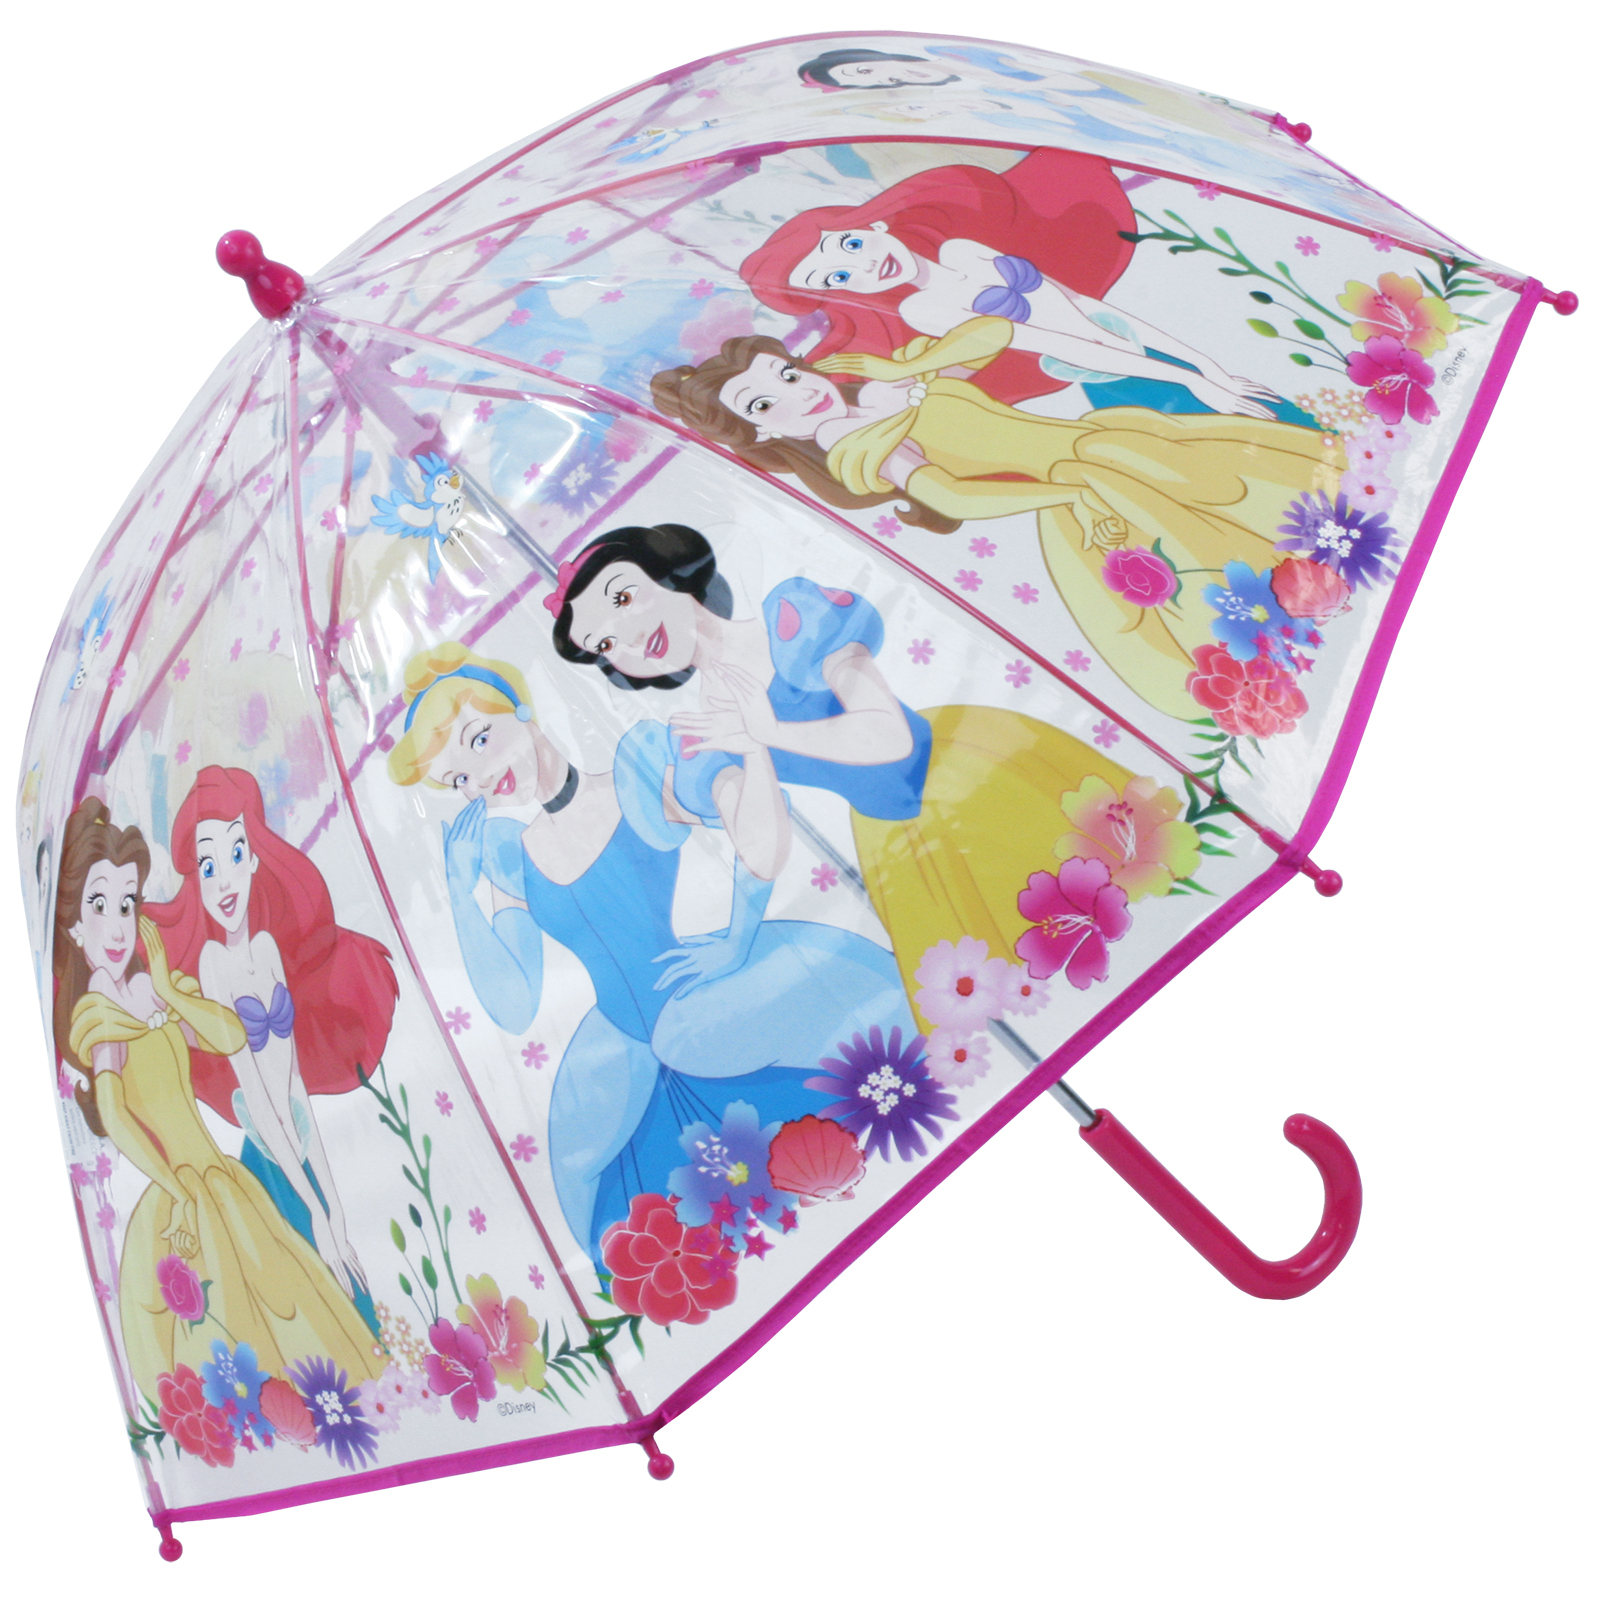 Disney Princesses Children's Clear Dome Umbrella